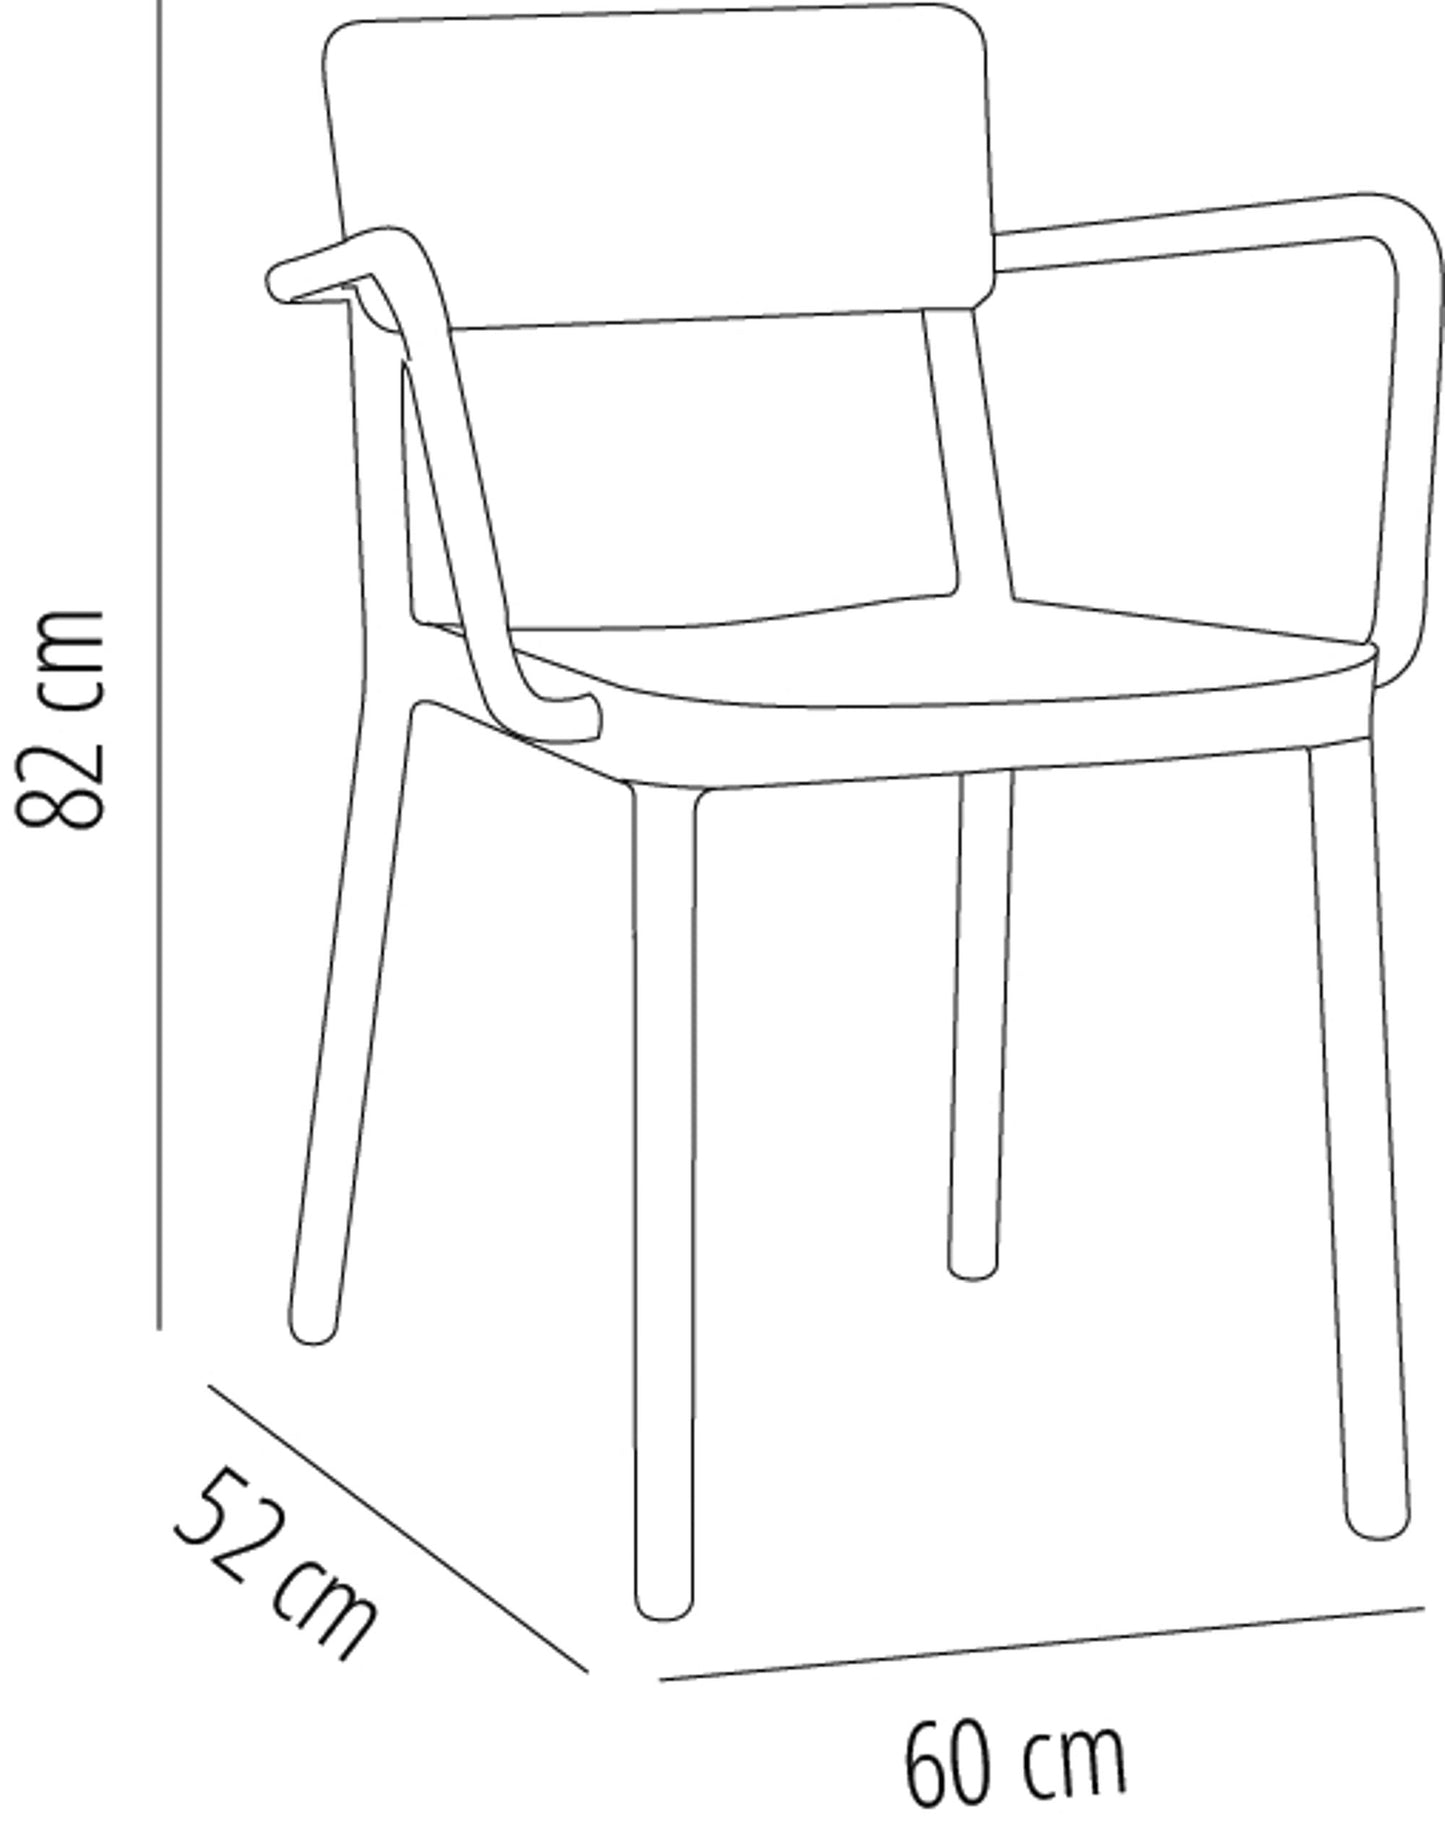 Resol lisboa set 2 silla con brazos interior, exterior rojo